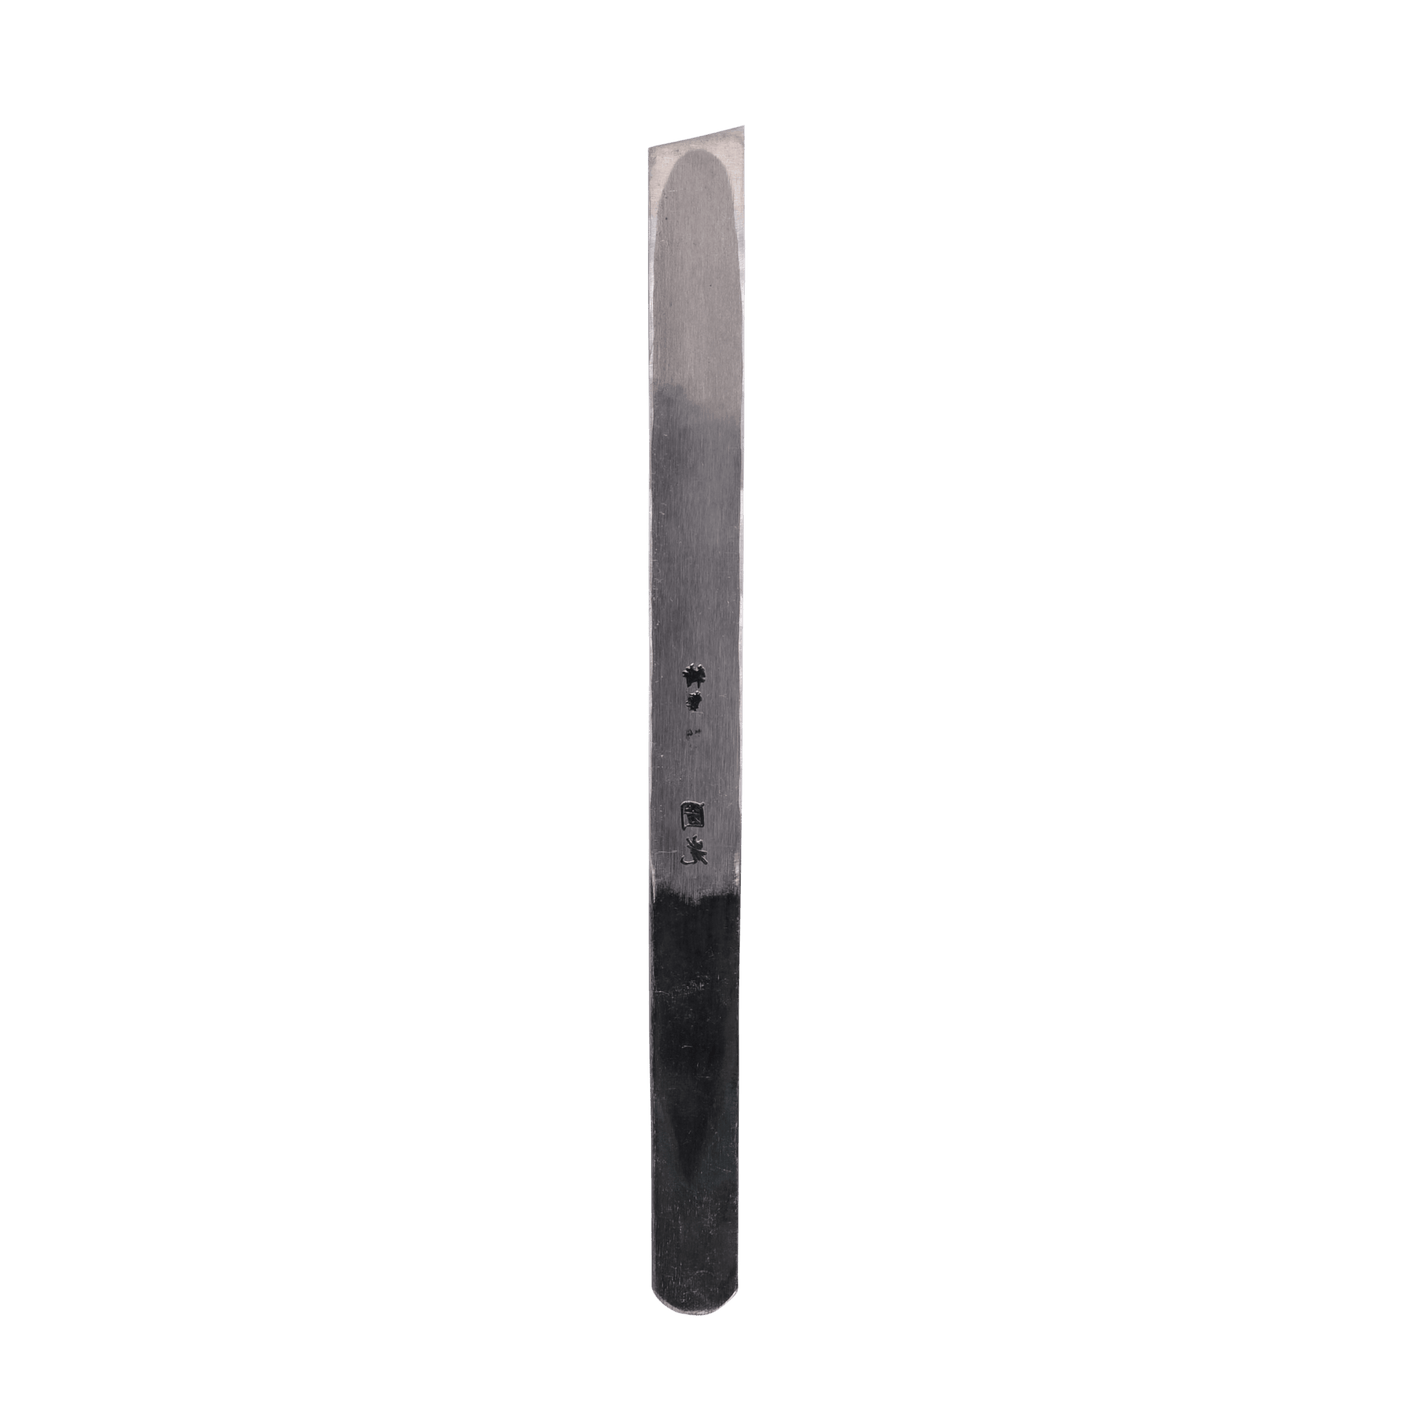 Shirahiki Marking Knife - Marking Knives - Japanese Tools Australia